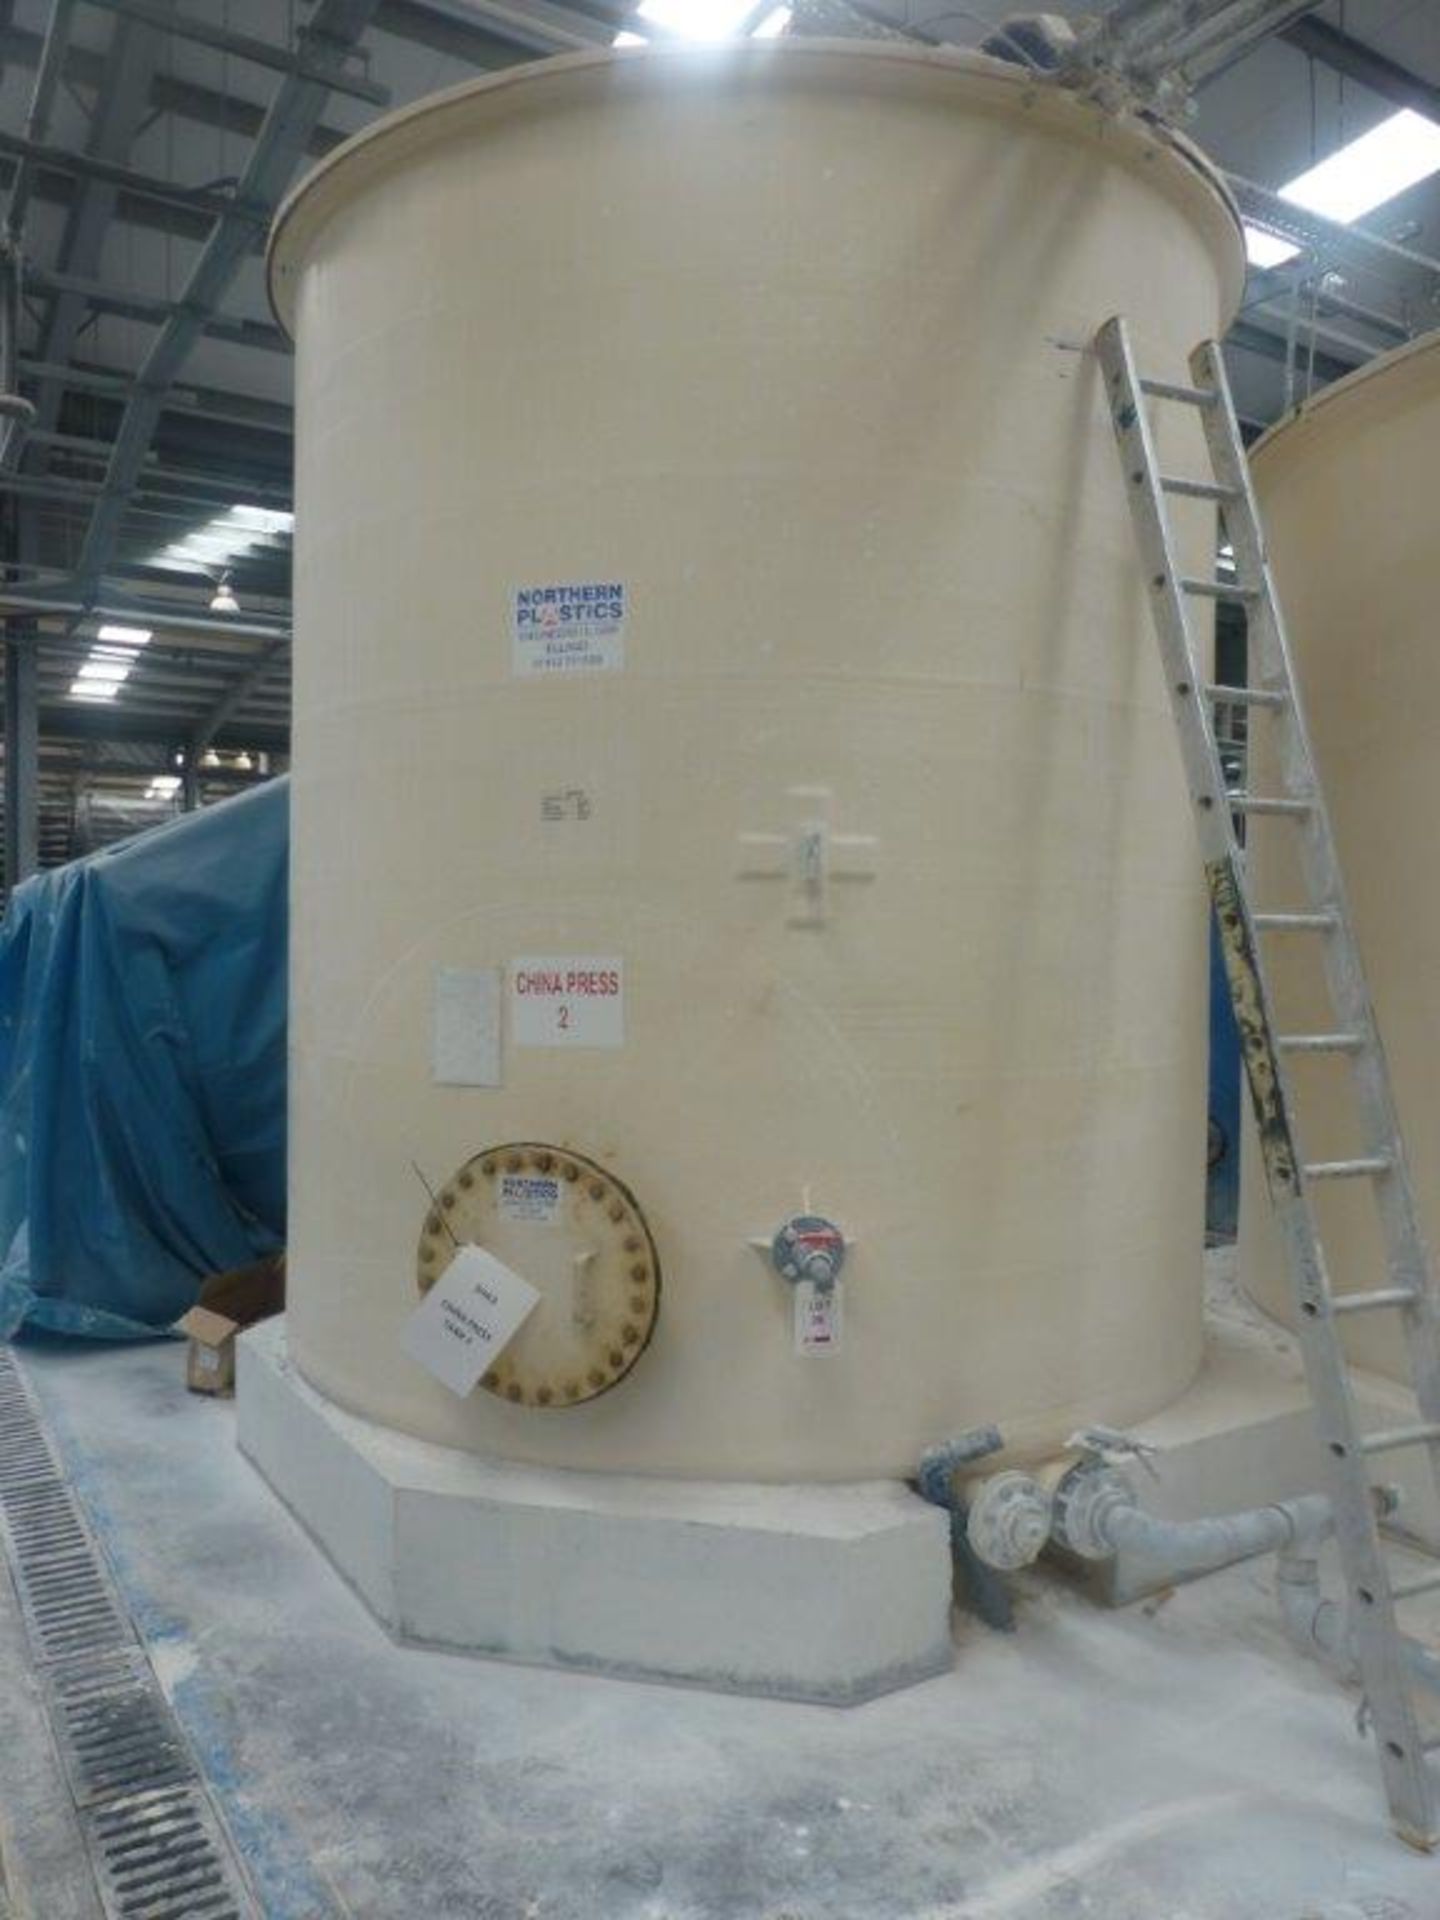 Northern Plastics 24m GRP storage tank with agitator, plant No SHP3-CHINA PRESS TANK 2 with piping - Image 2 of 4